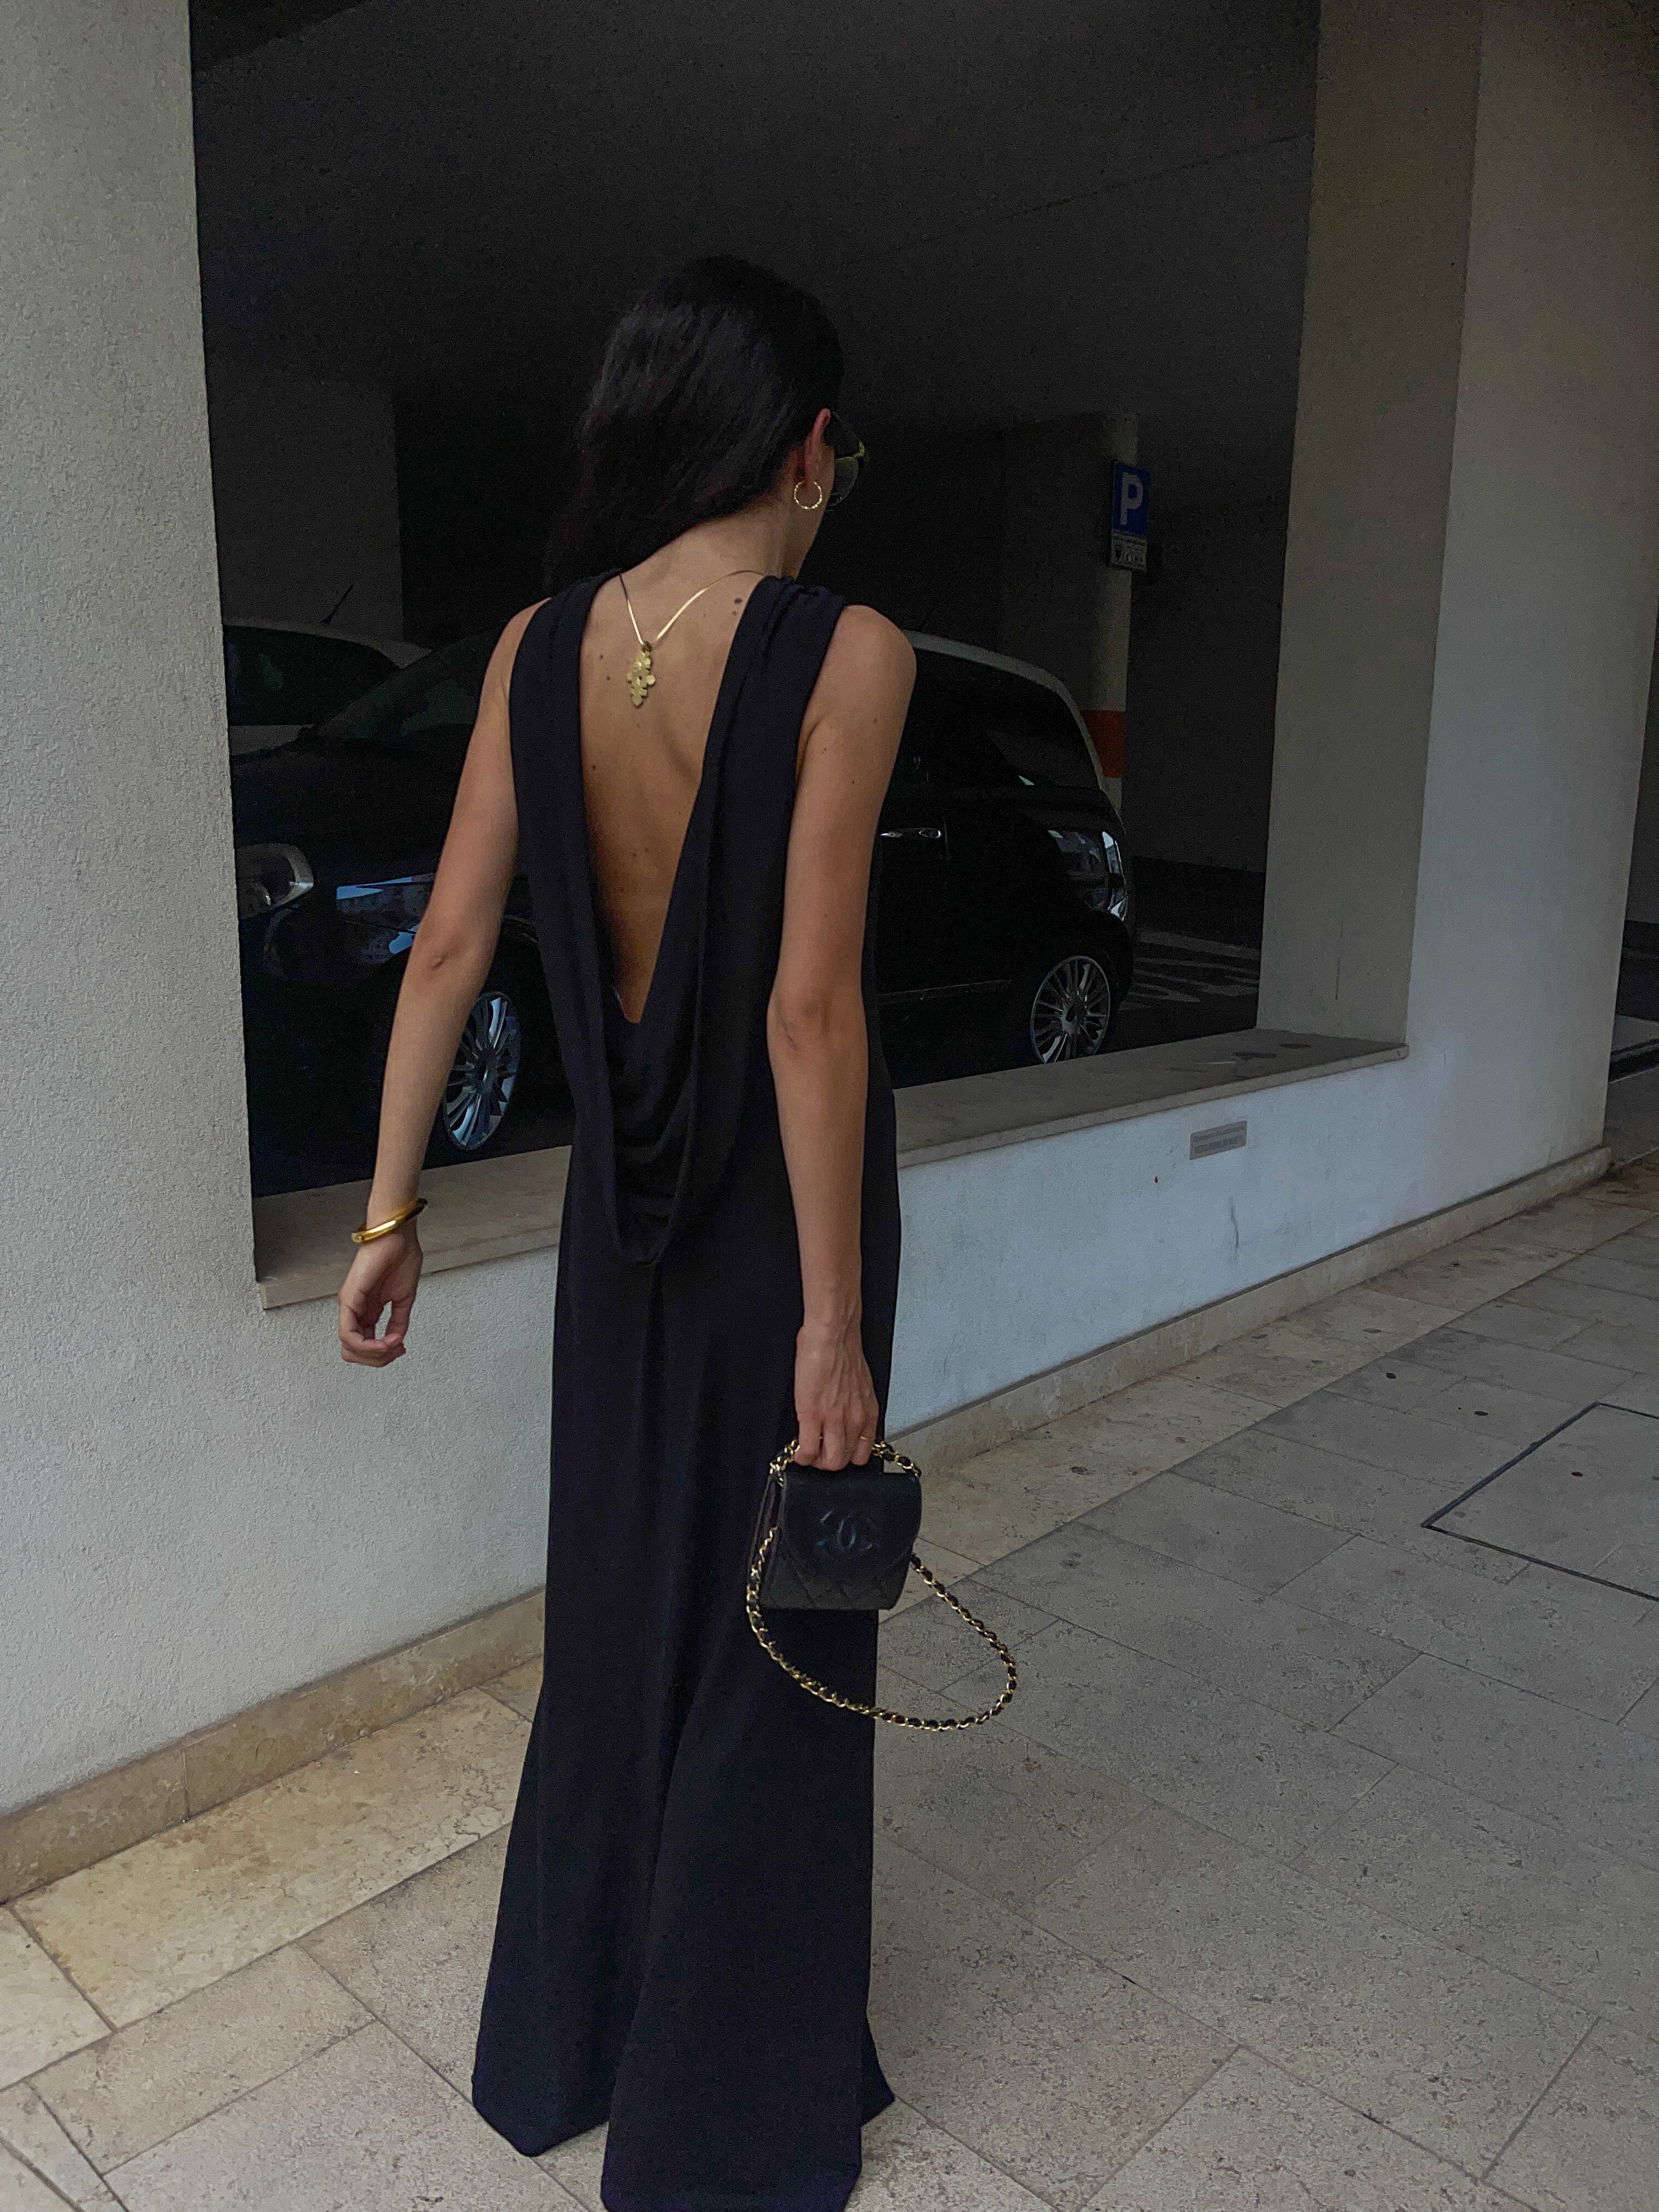 Backless black dress 🖤